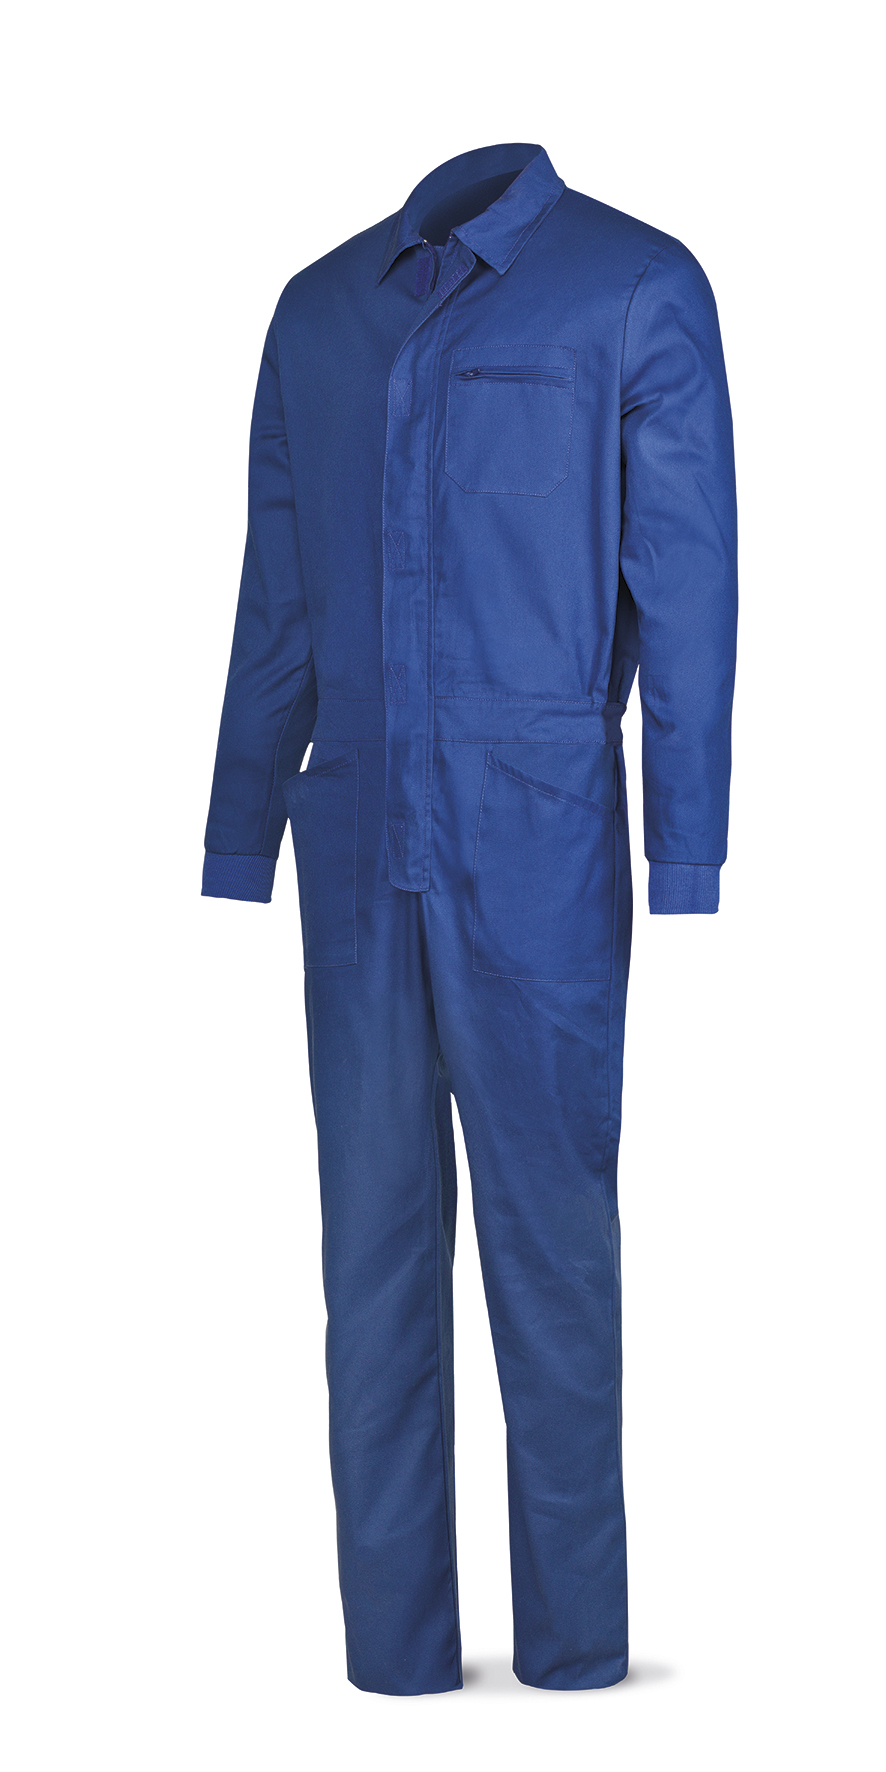 388-BT Workwear Basic Line Royal blue Tergal coverall 200 gr.